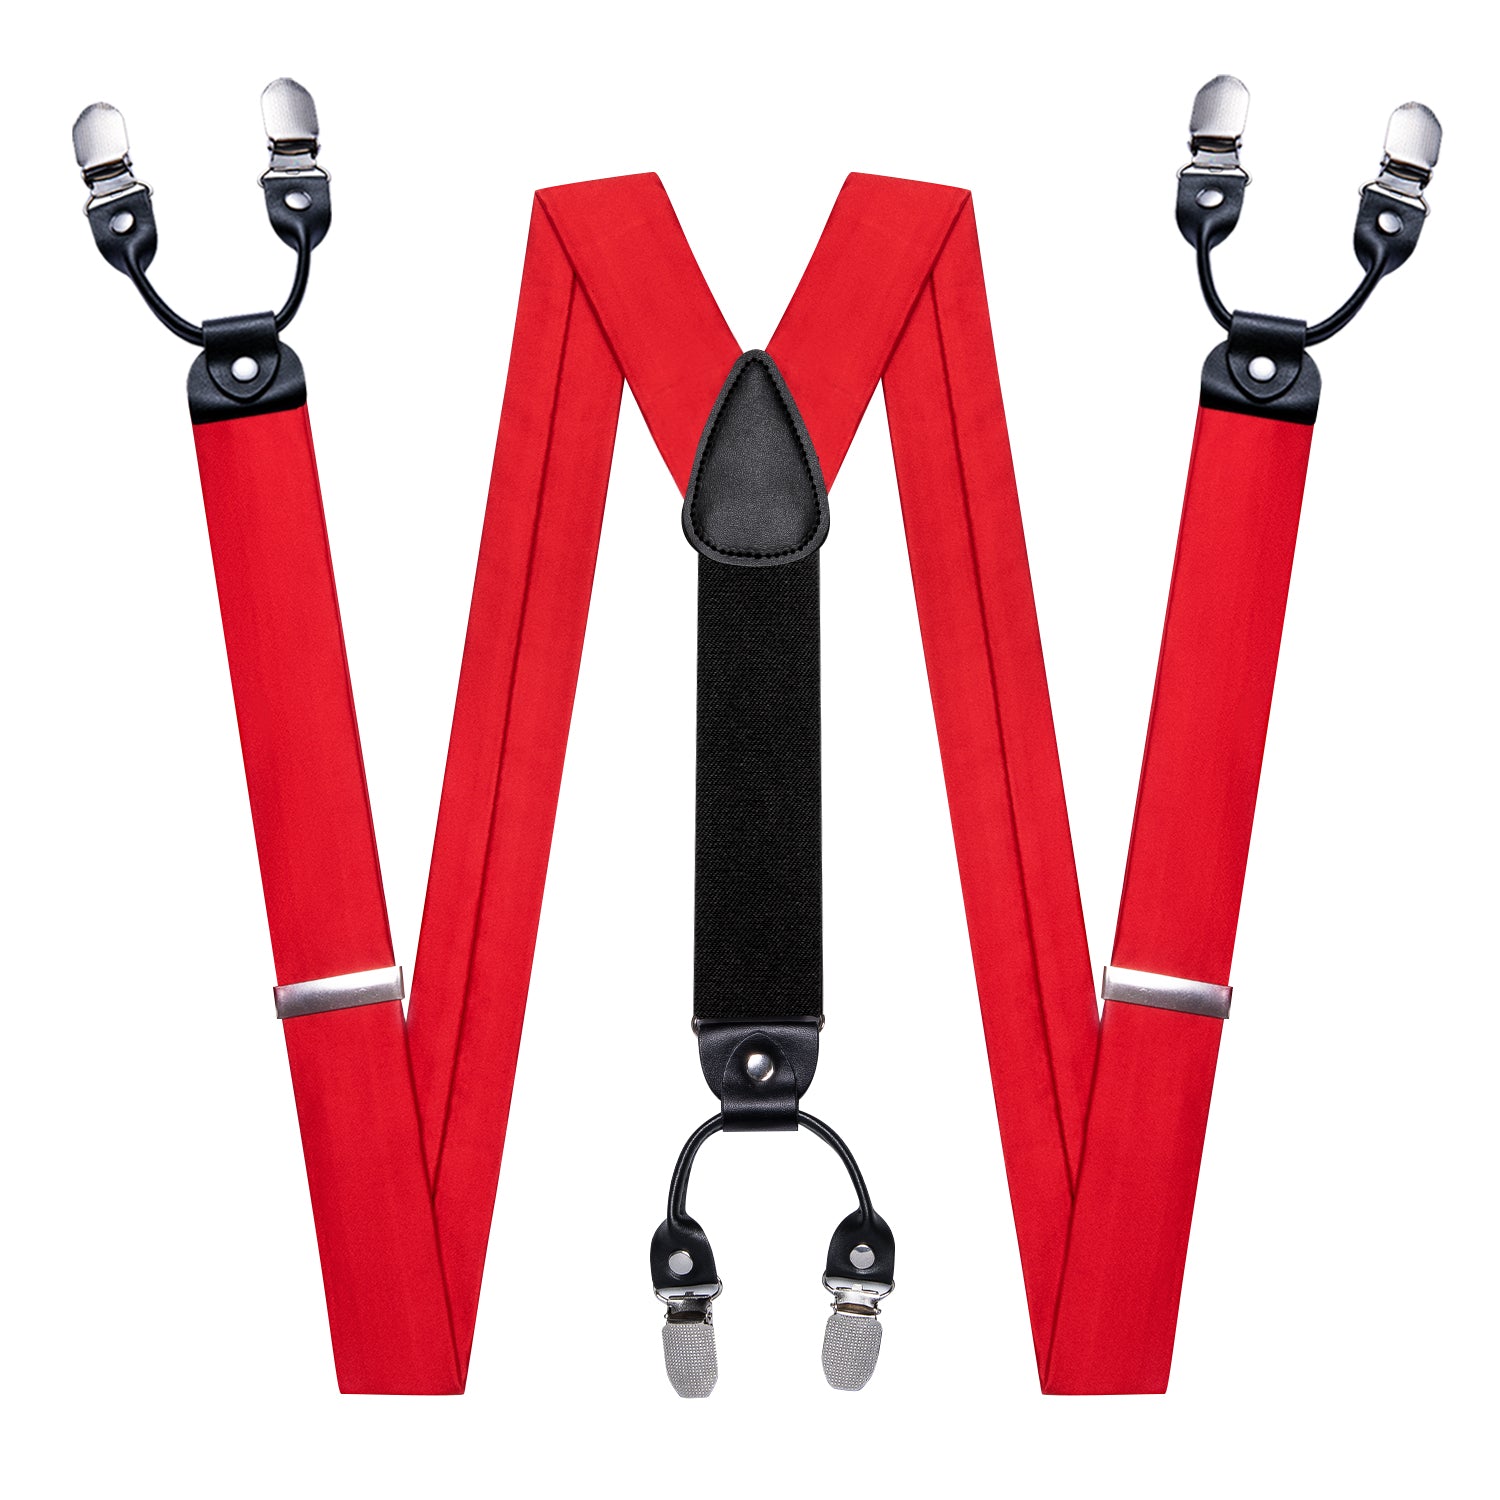 Barry.wang Red Tie Solid Y Back Adjustable Suspenders Bow Tie Set